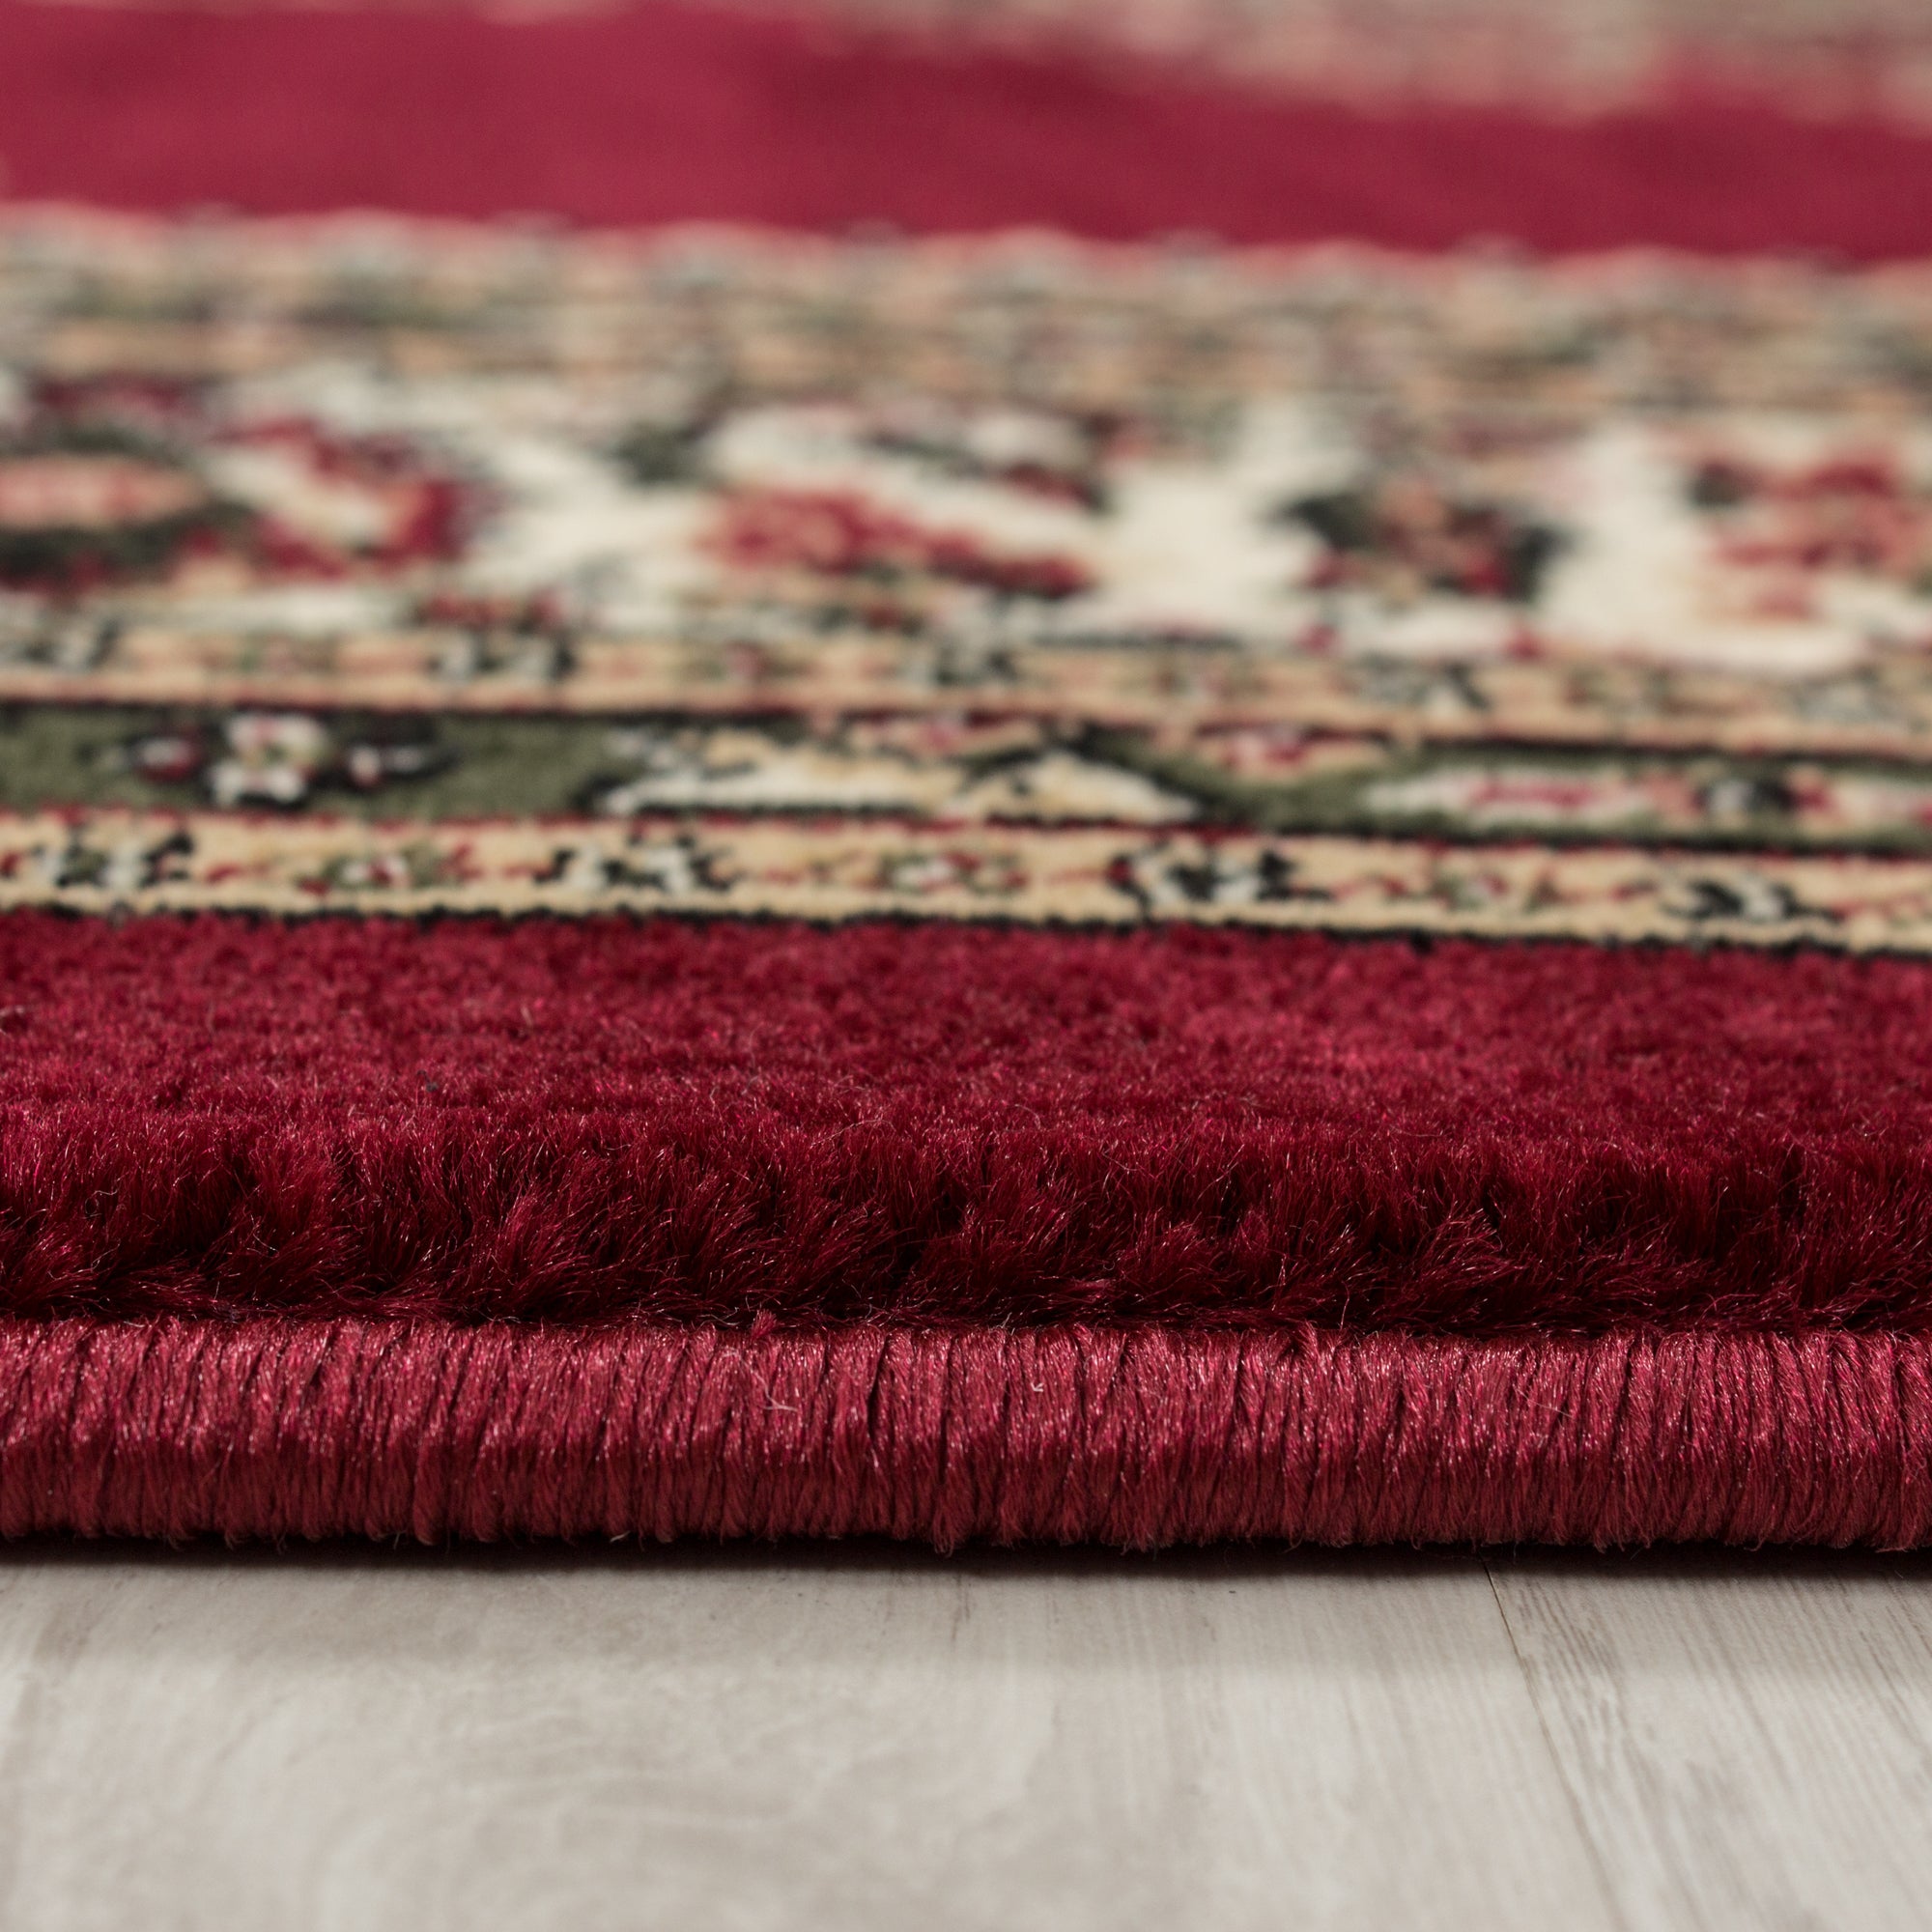 Klassik Orient Teppich Edle Bordüre Ornament Muster Wohnzimmerteppich Rot Beige